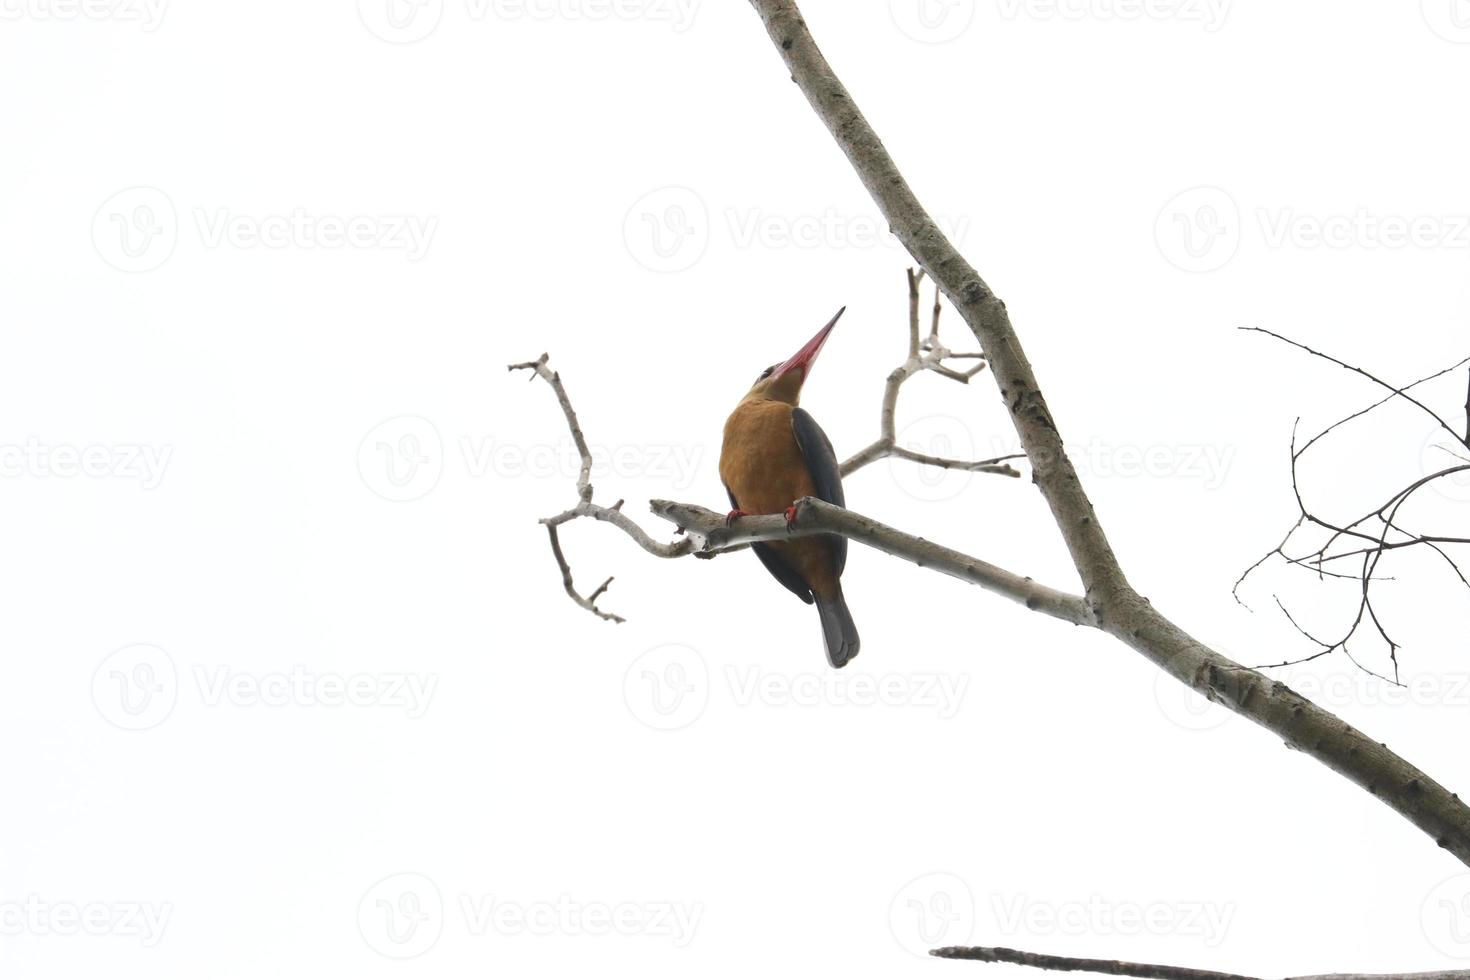 Stock billed kingfisher photo